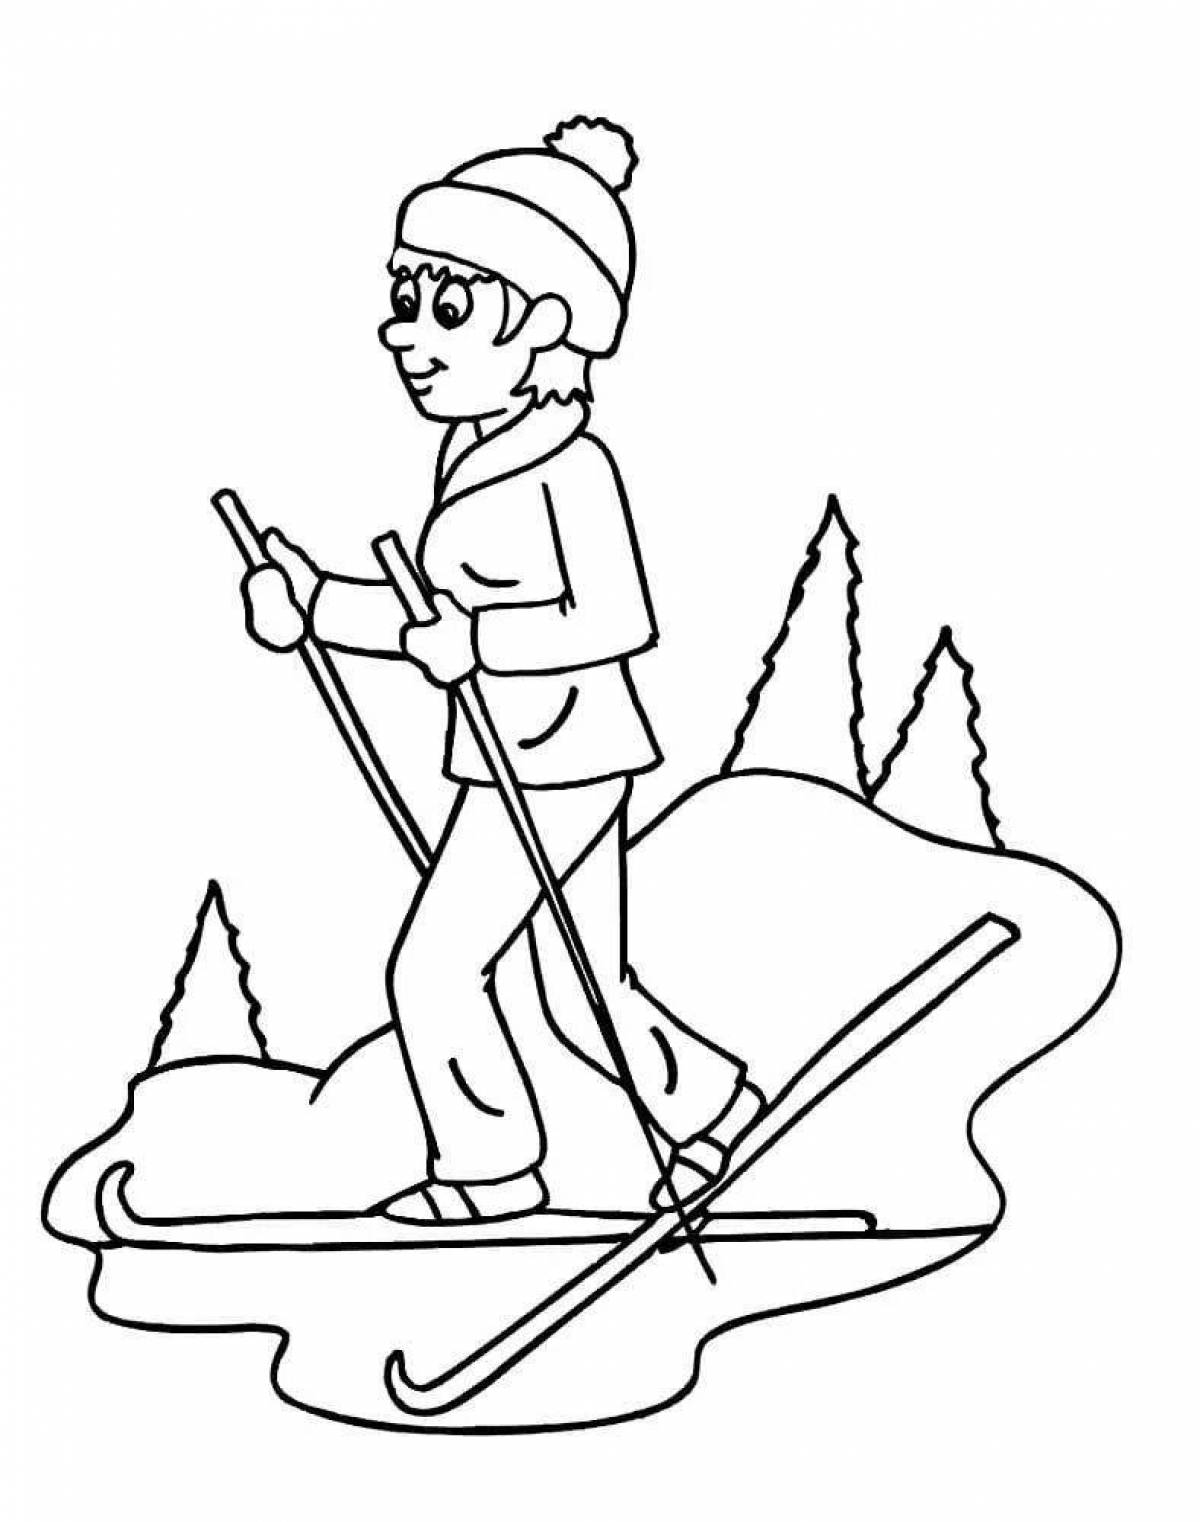 Sociable man on skis